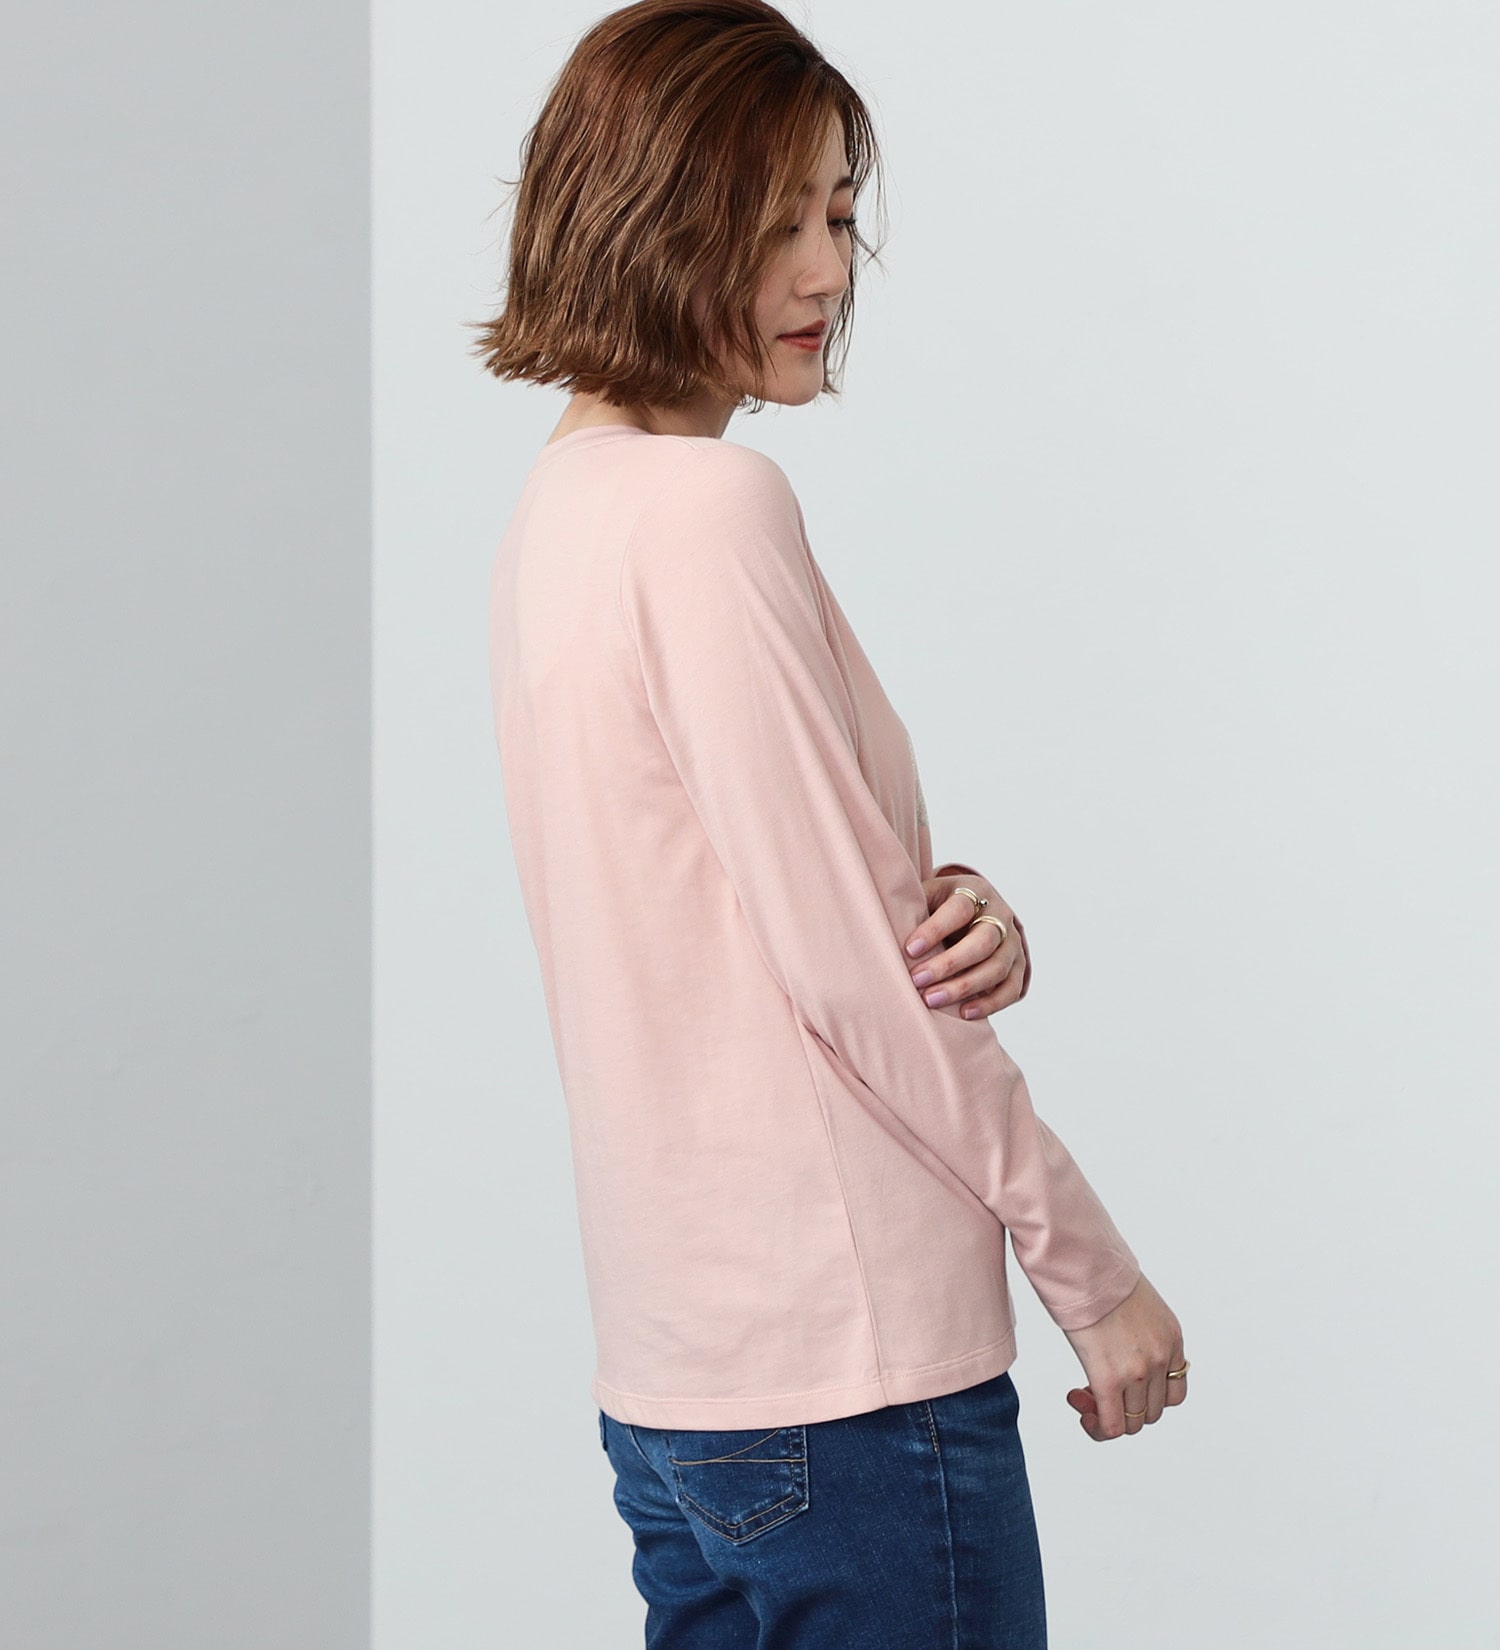 SOMETHING(サムシング)のSOMETHING フォイルプリントTシャツ【長袖】|トップス/Tシャツ/カットソー/レディース|ピンク